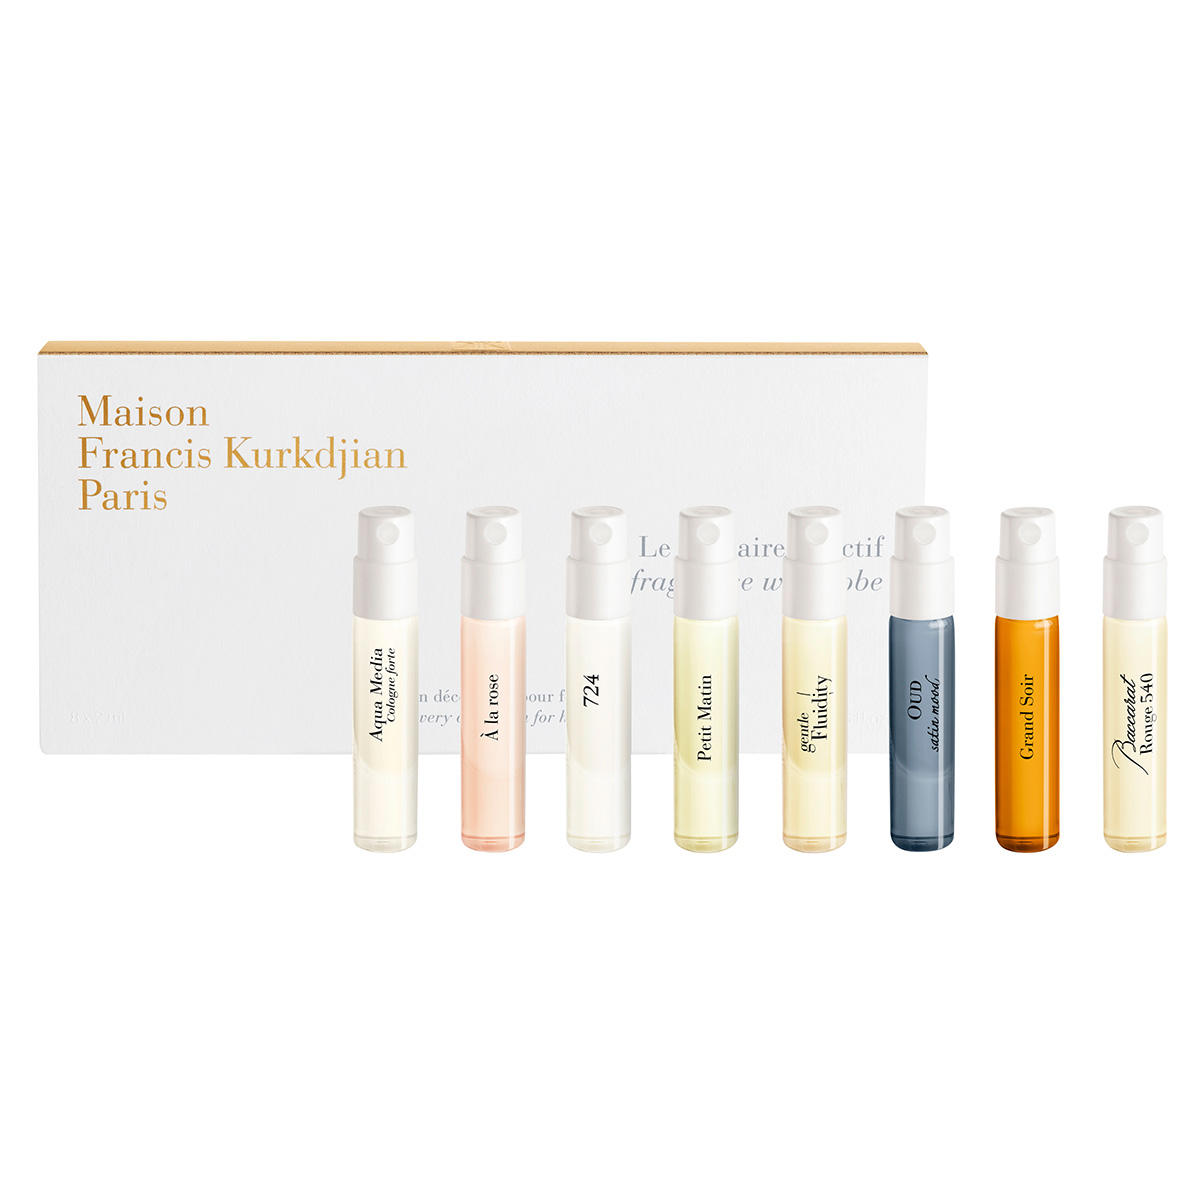 Maison Francis Kurkdjian Paris Mini Geuren Garderobe Voor Haar 2024 8 x 2 ml - 1